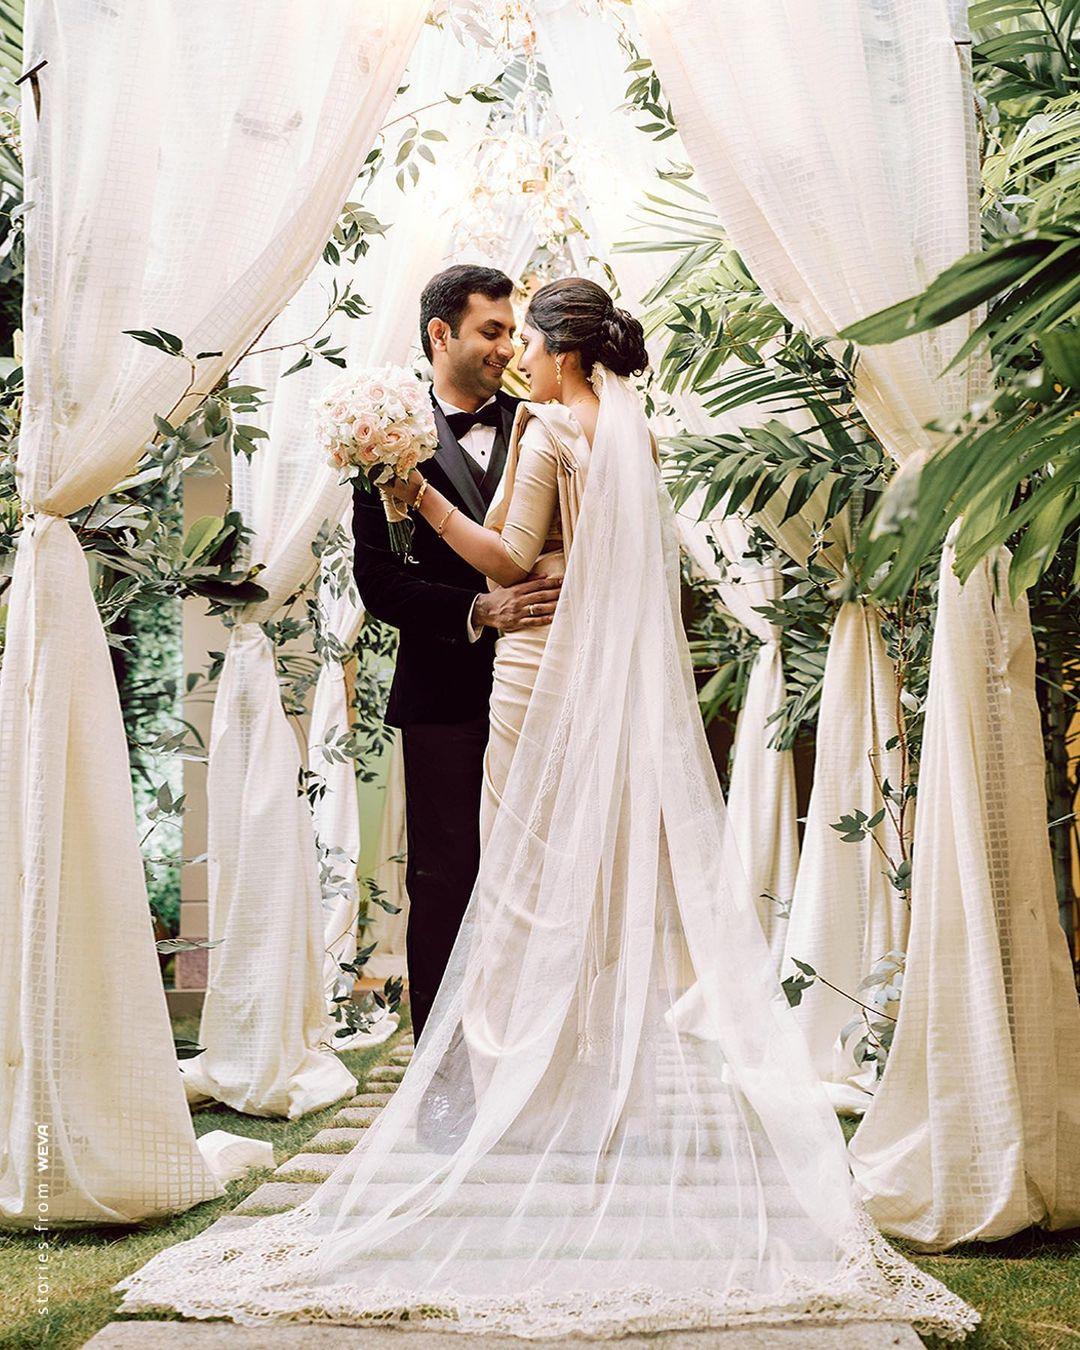 wedding #kerala #kurta #pijama #green #white #dresscode #happyclients  #keep_calm_and_follow_the_dress_code | Instagram